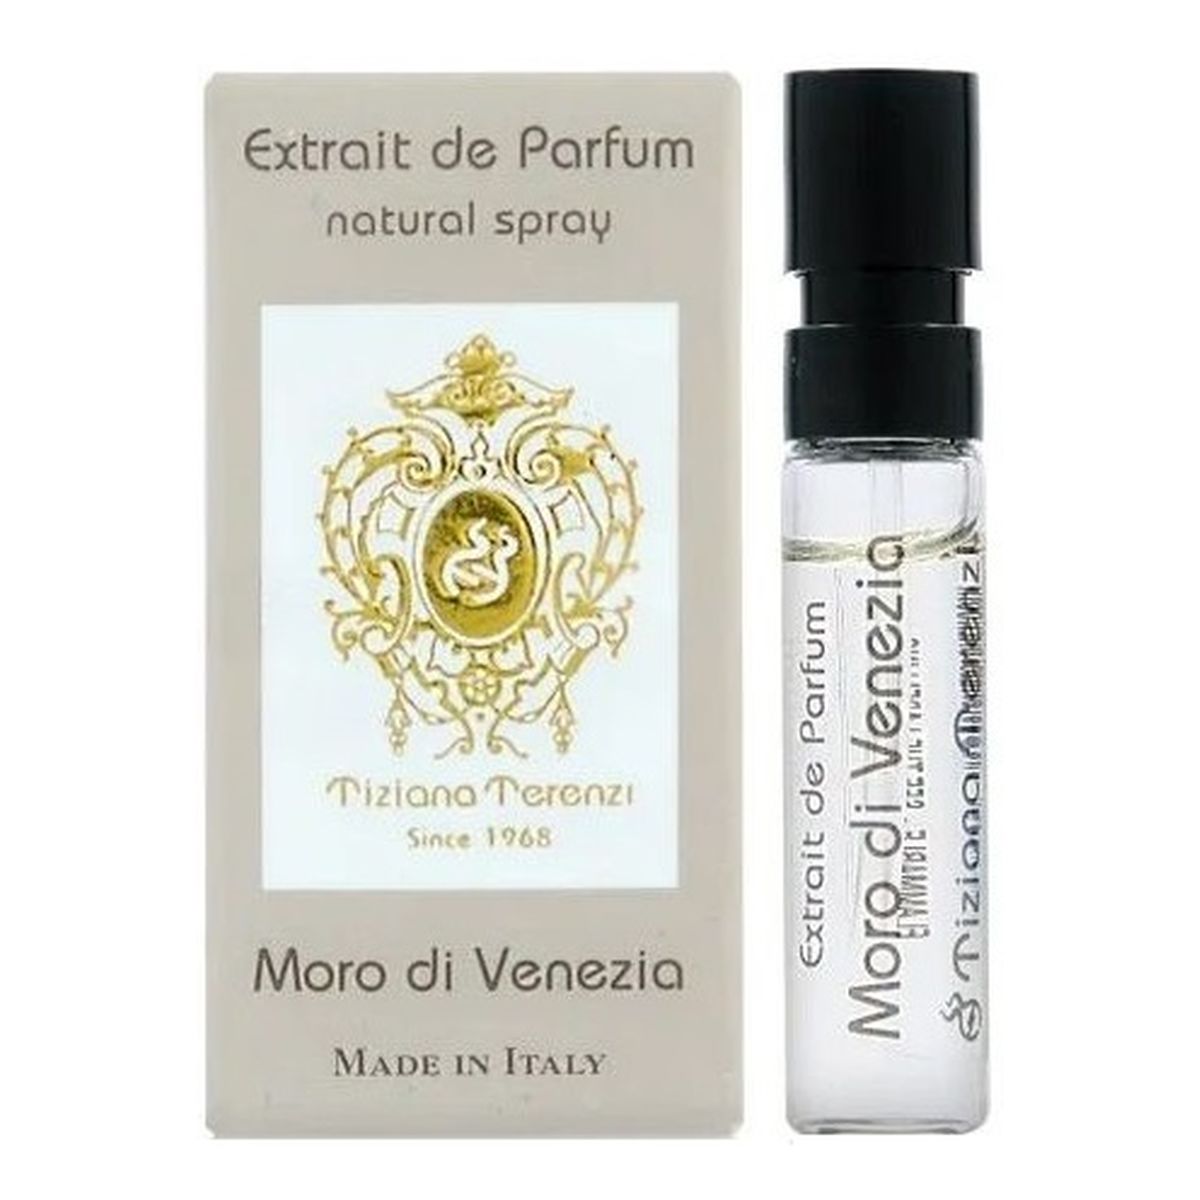 Tiziana Terenzi Moro di venezia ekstrakt perfum spray próbka 1,5 ml 1.5ml